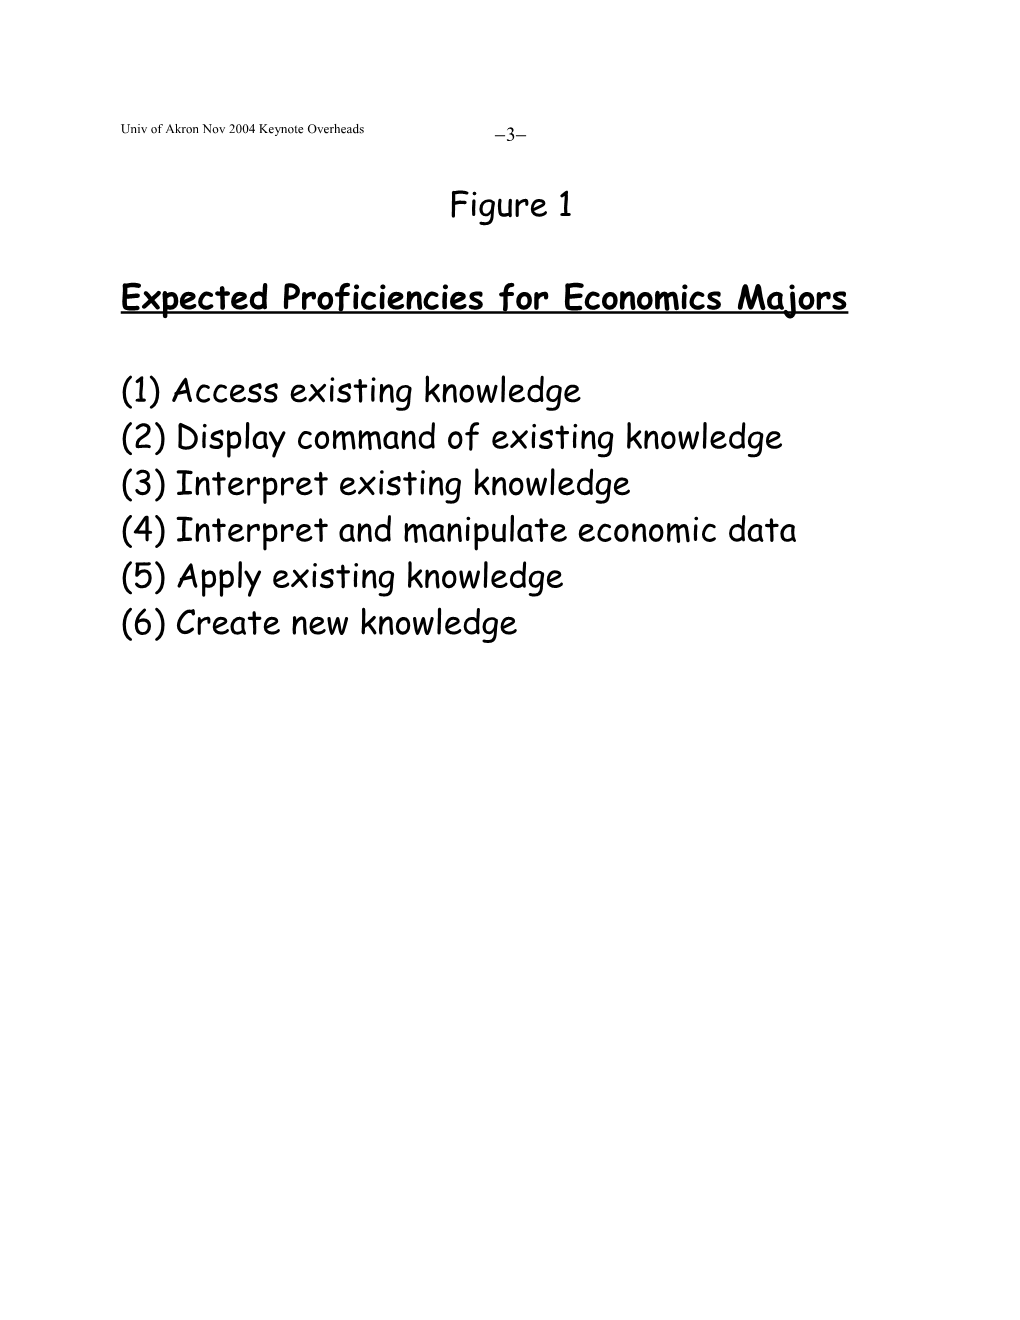 A Proficiencies-Based Economics Major